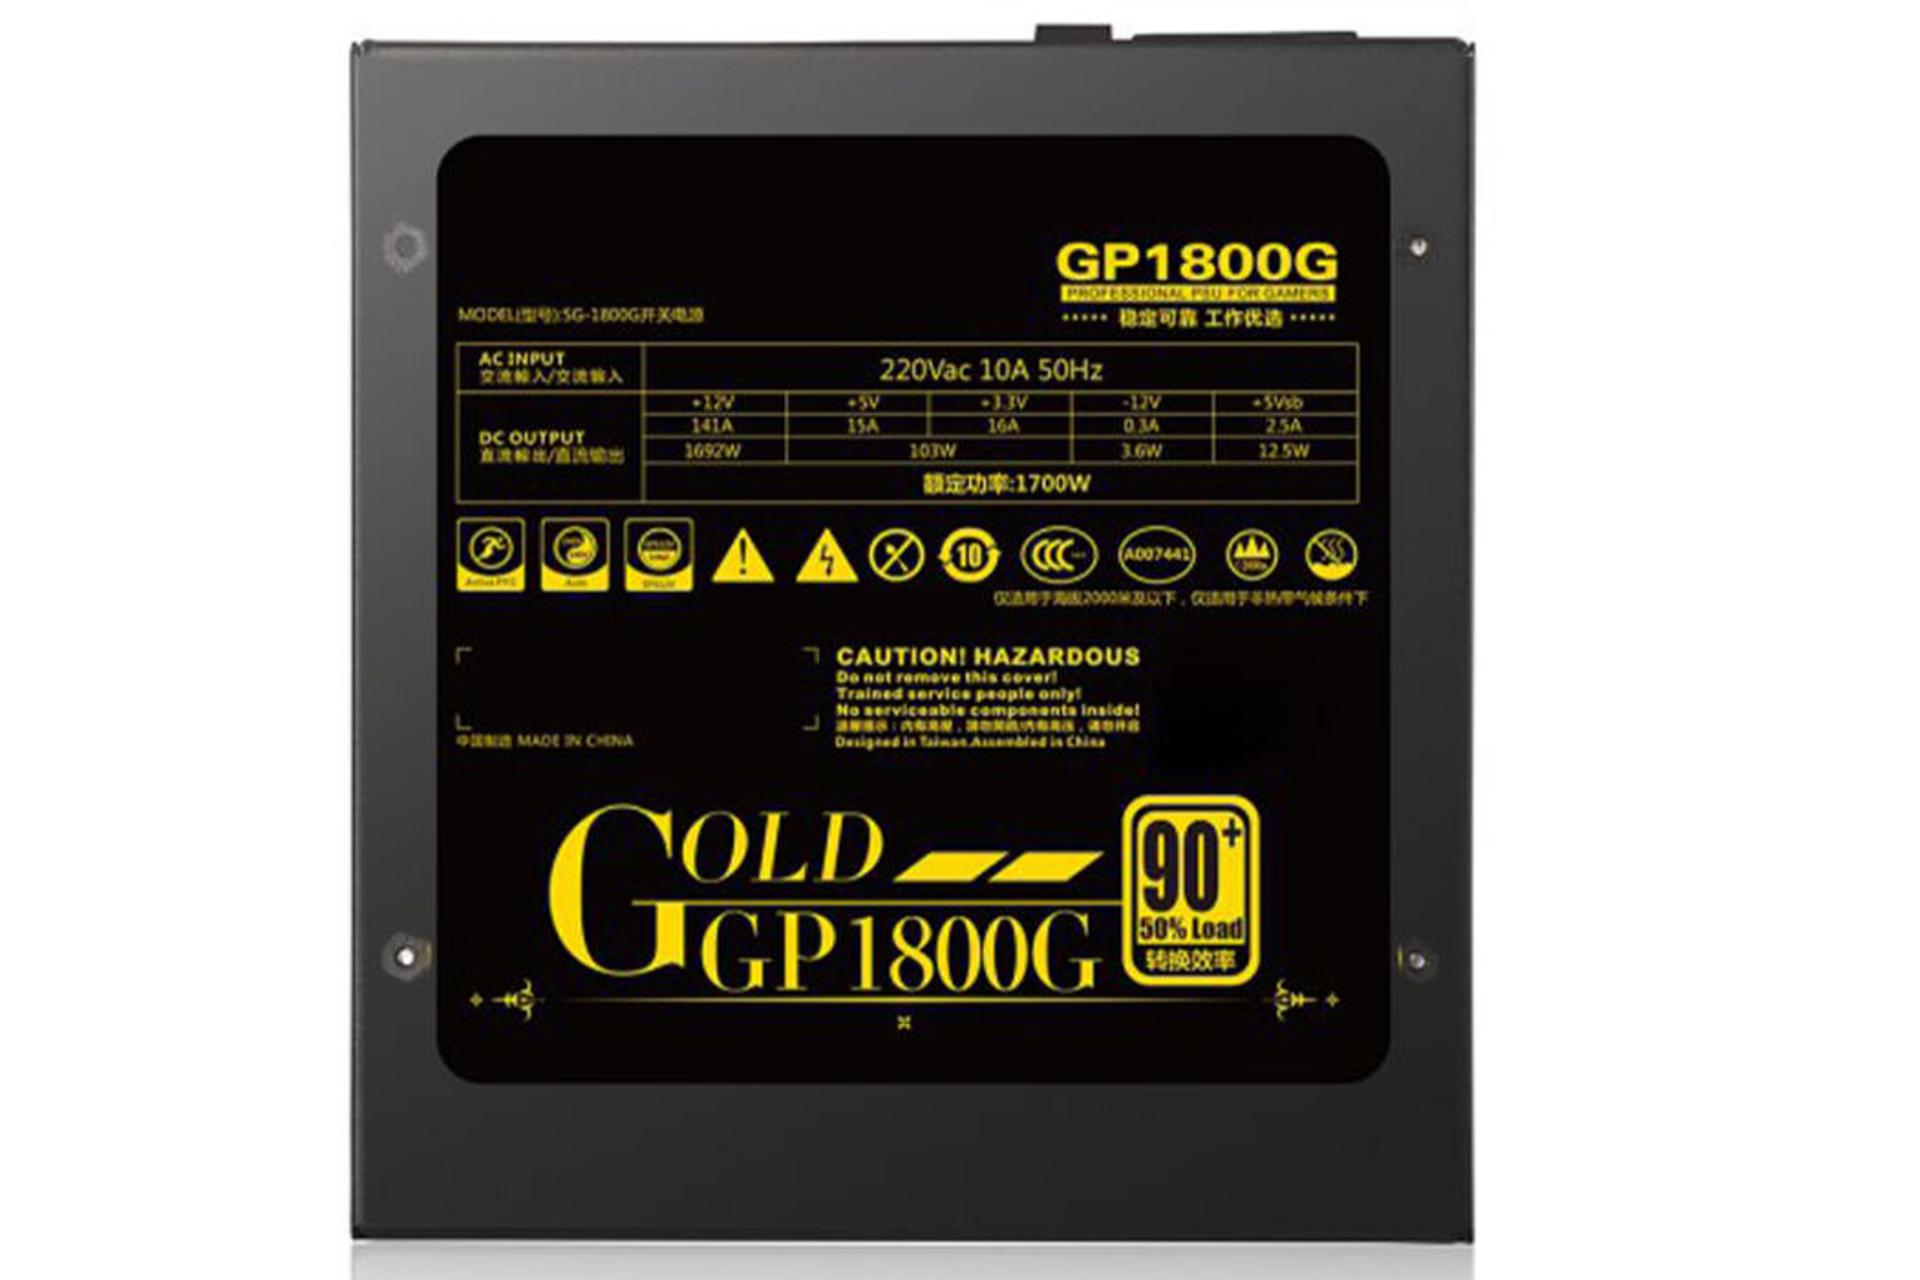 پاور کامپیوتر سگوتپ GP1800G با توان 1700 وات برچسب مشخصات